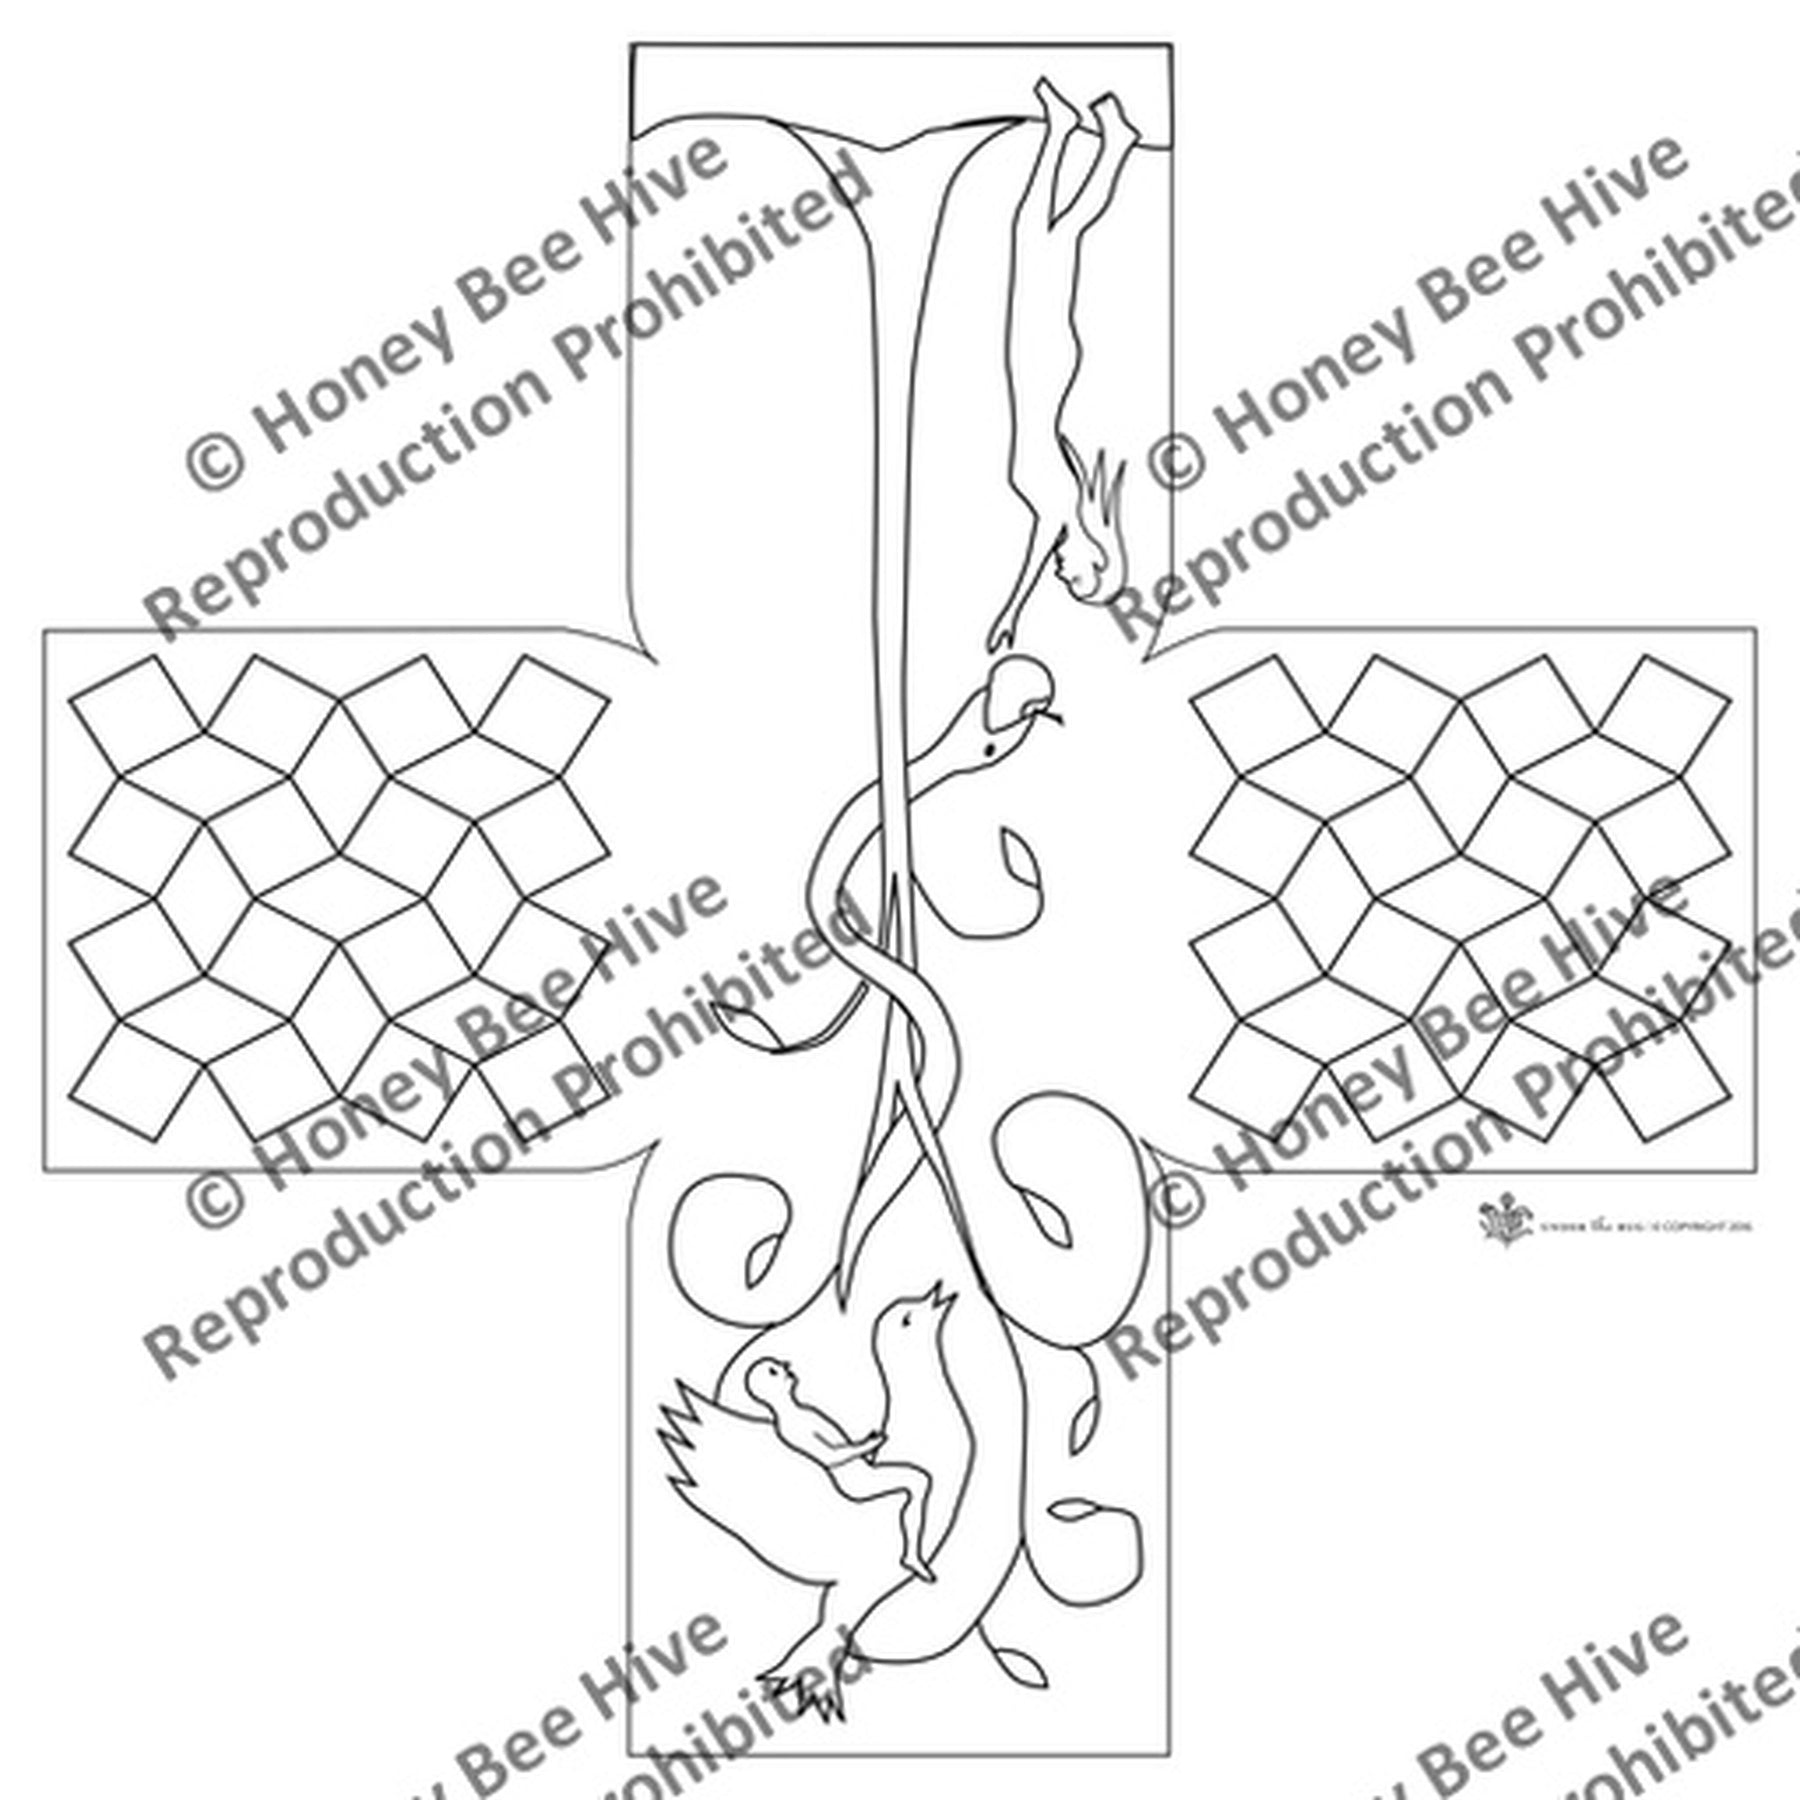 Adam & Eve - Cube Footstool Pattern, rug hooking pattern